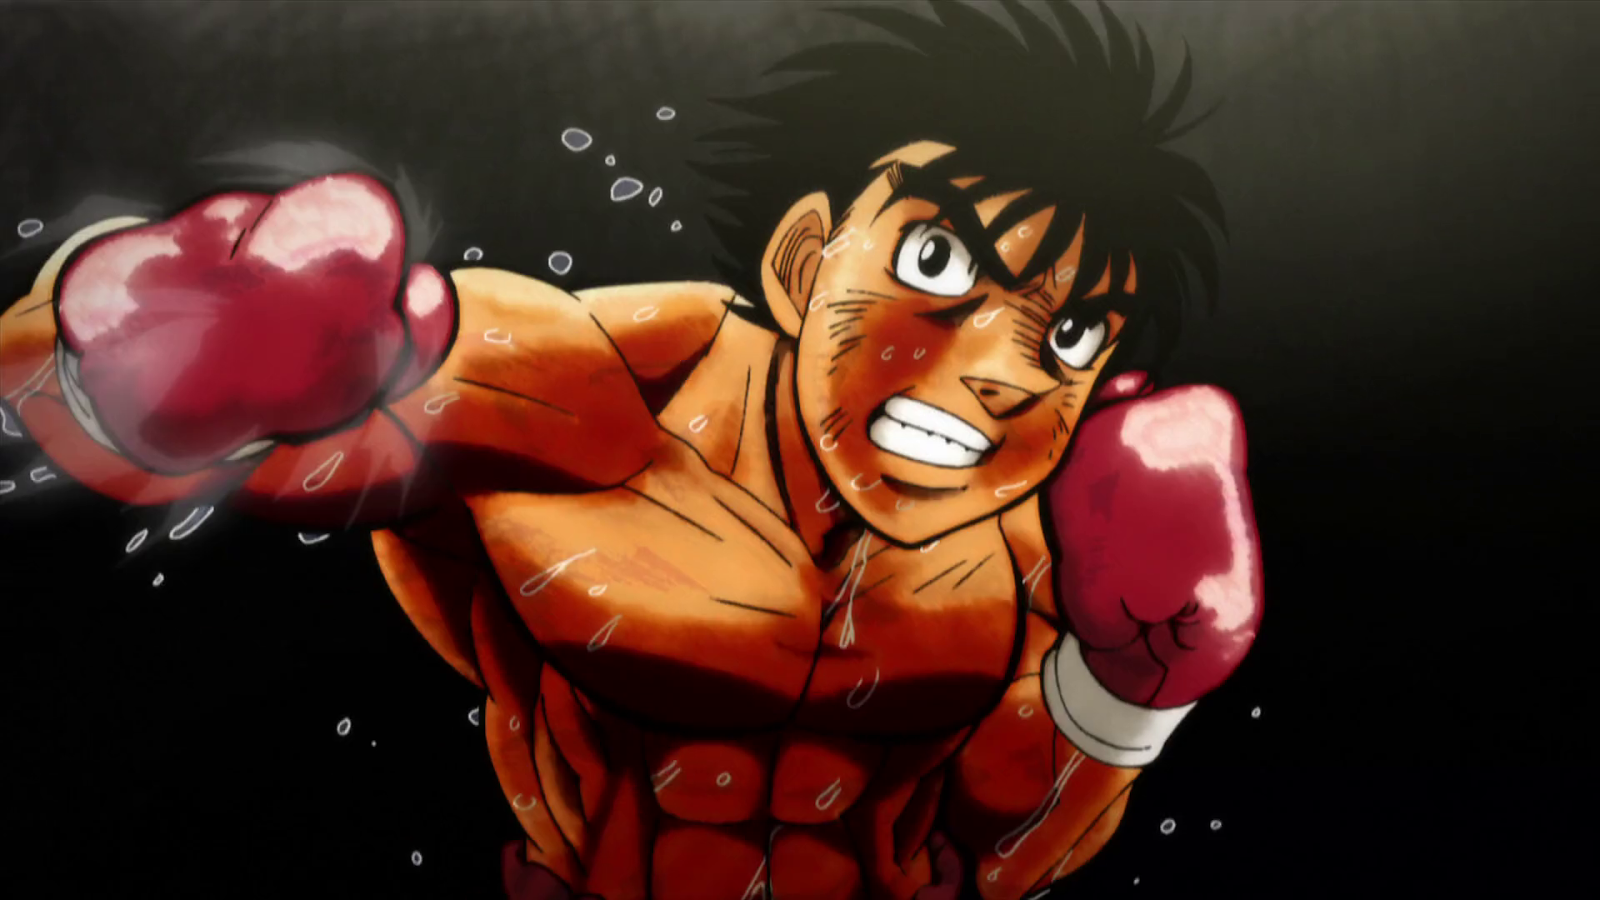 Anime Boxing Wallpaper HD